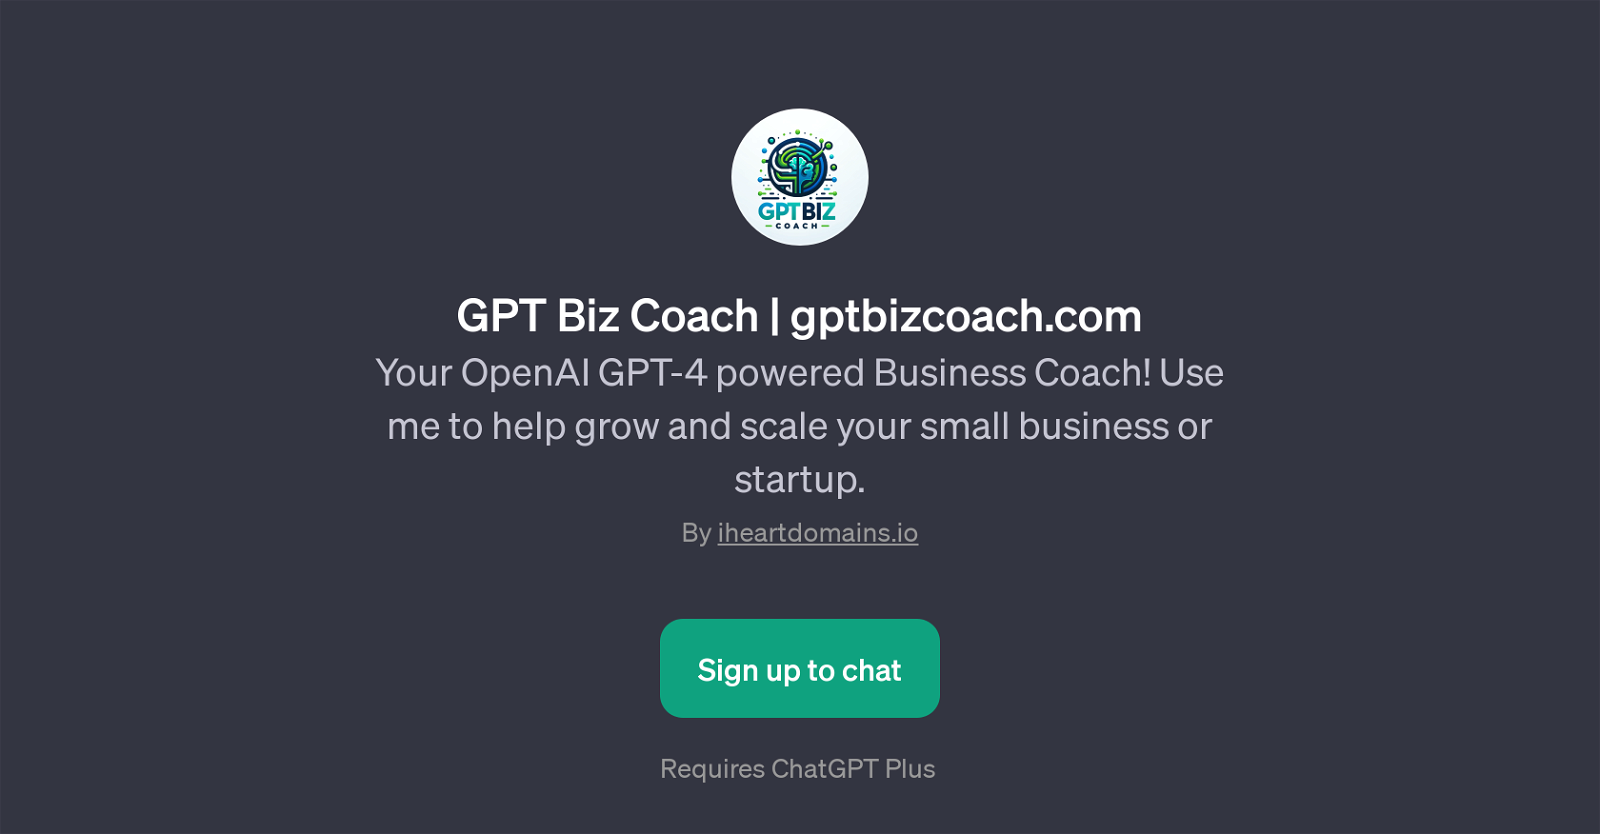 GPT Biz Coach website